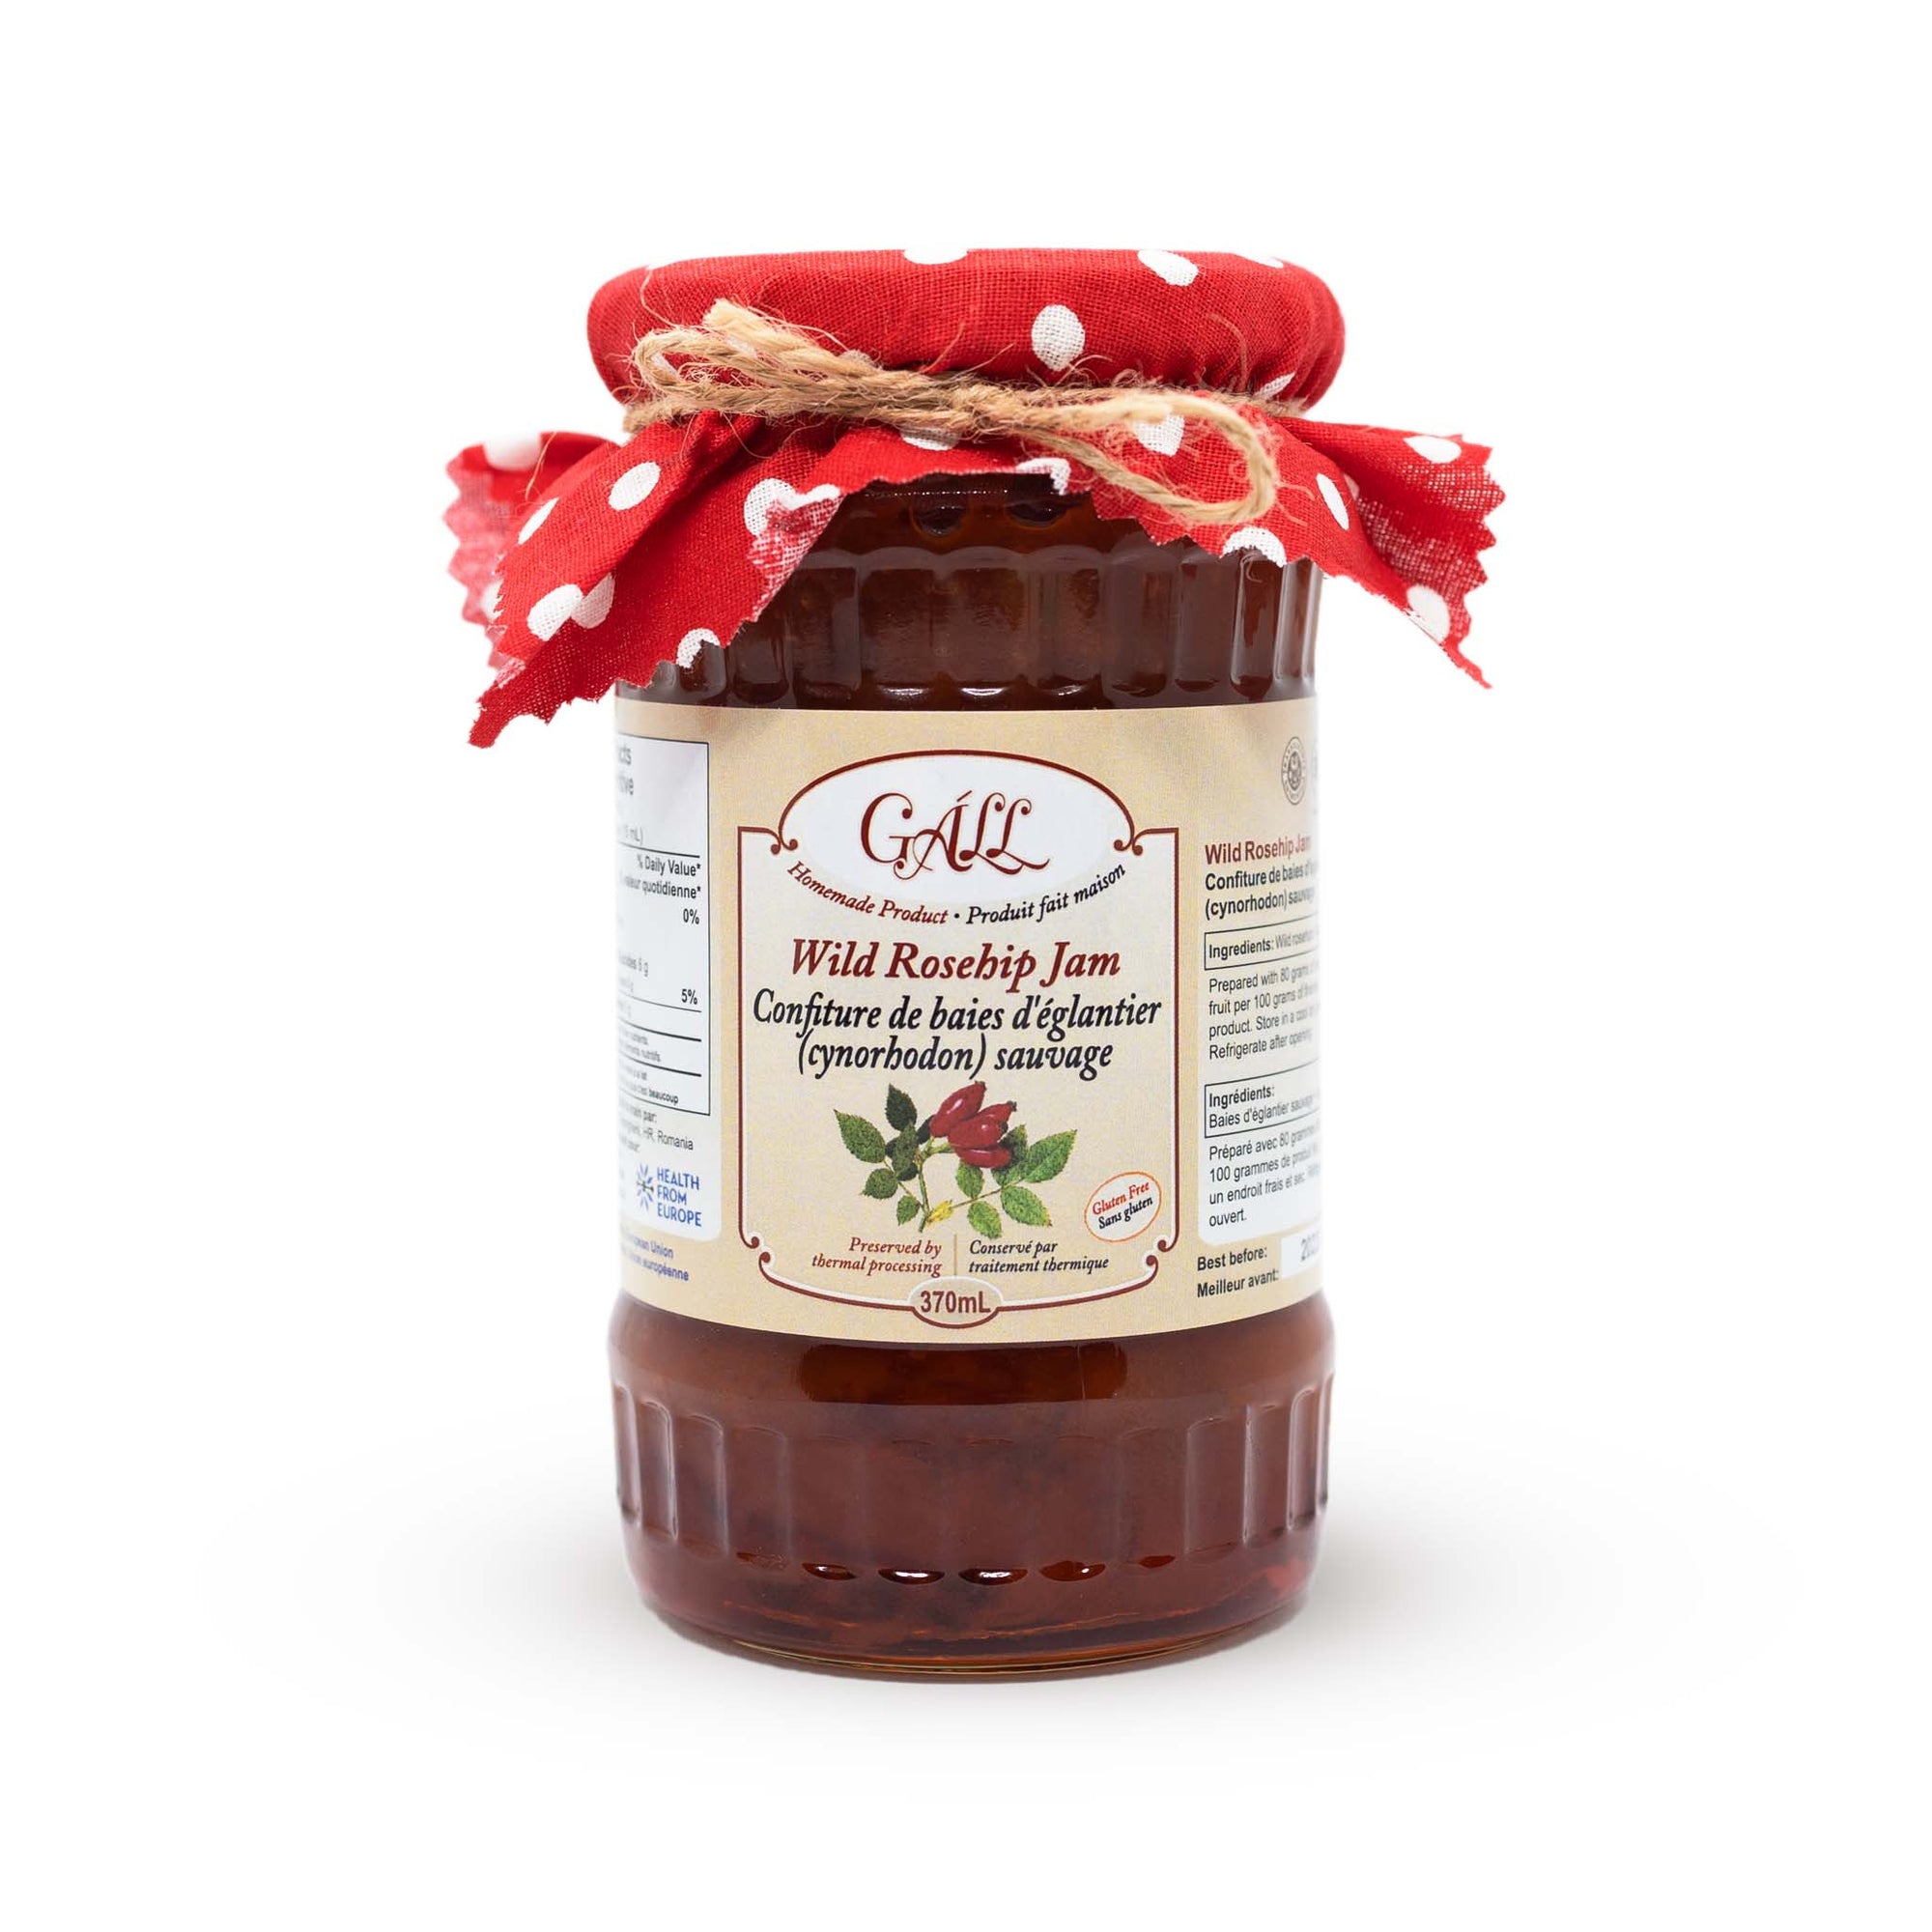 Artisanal Wild Rosehip Jam jar Health from Europe